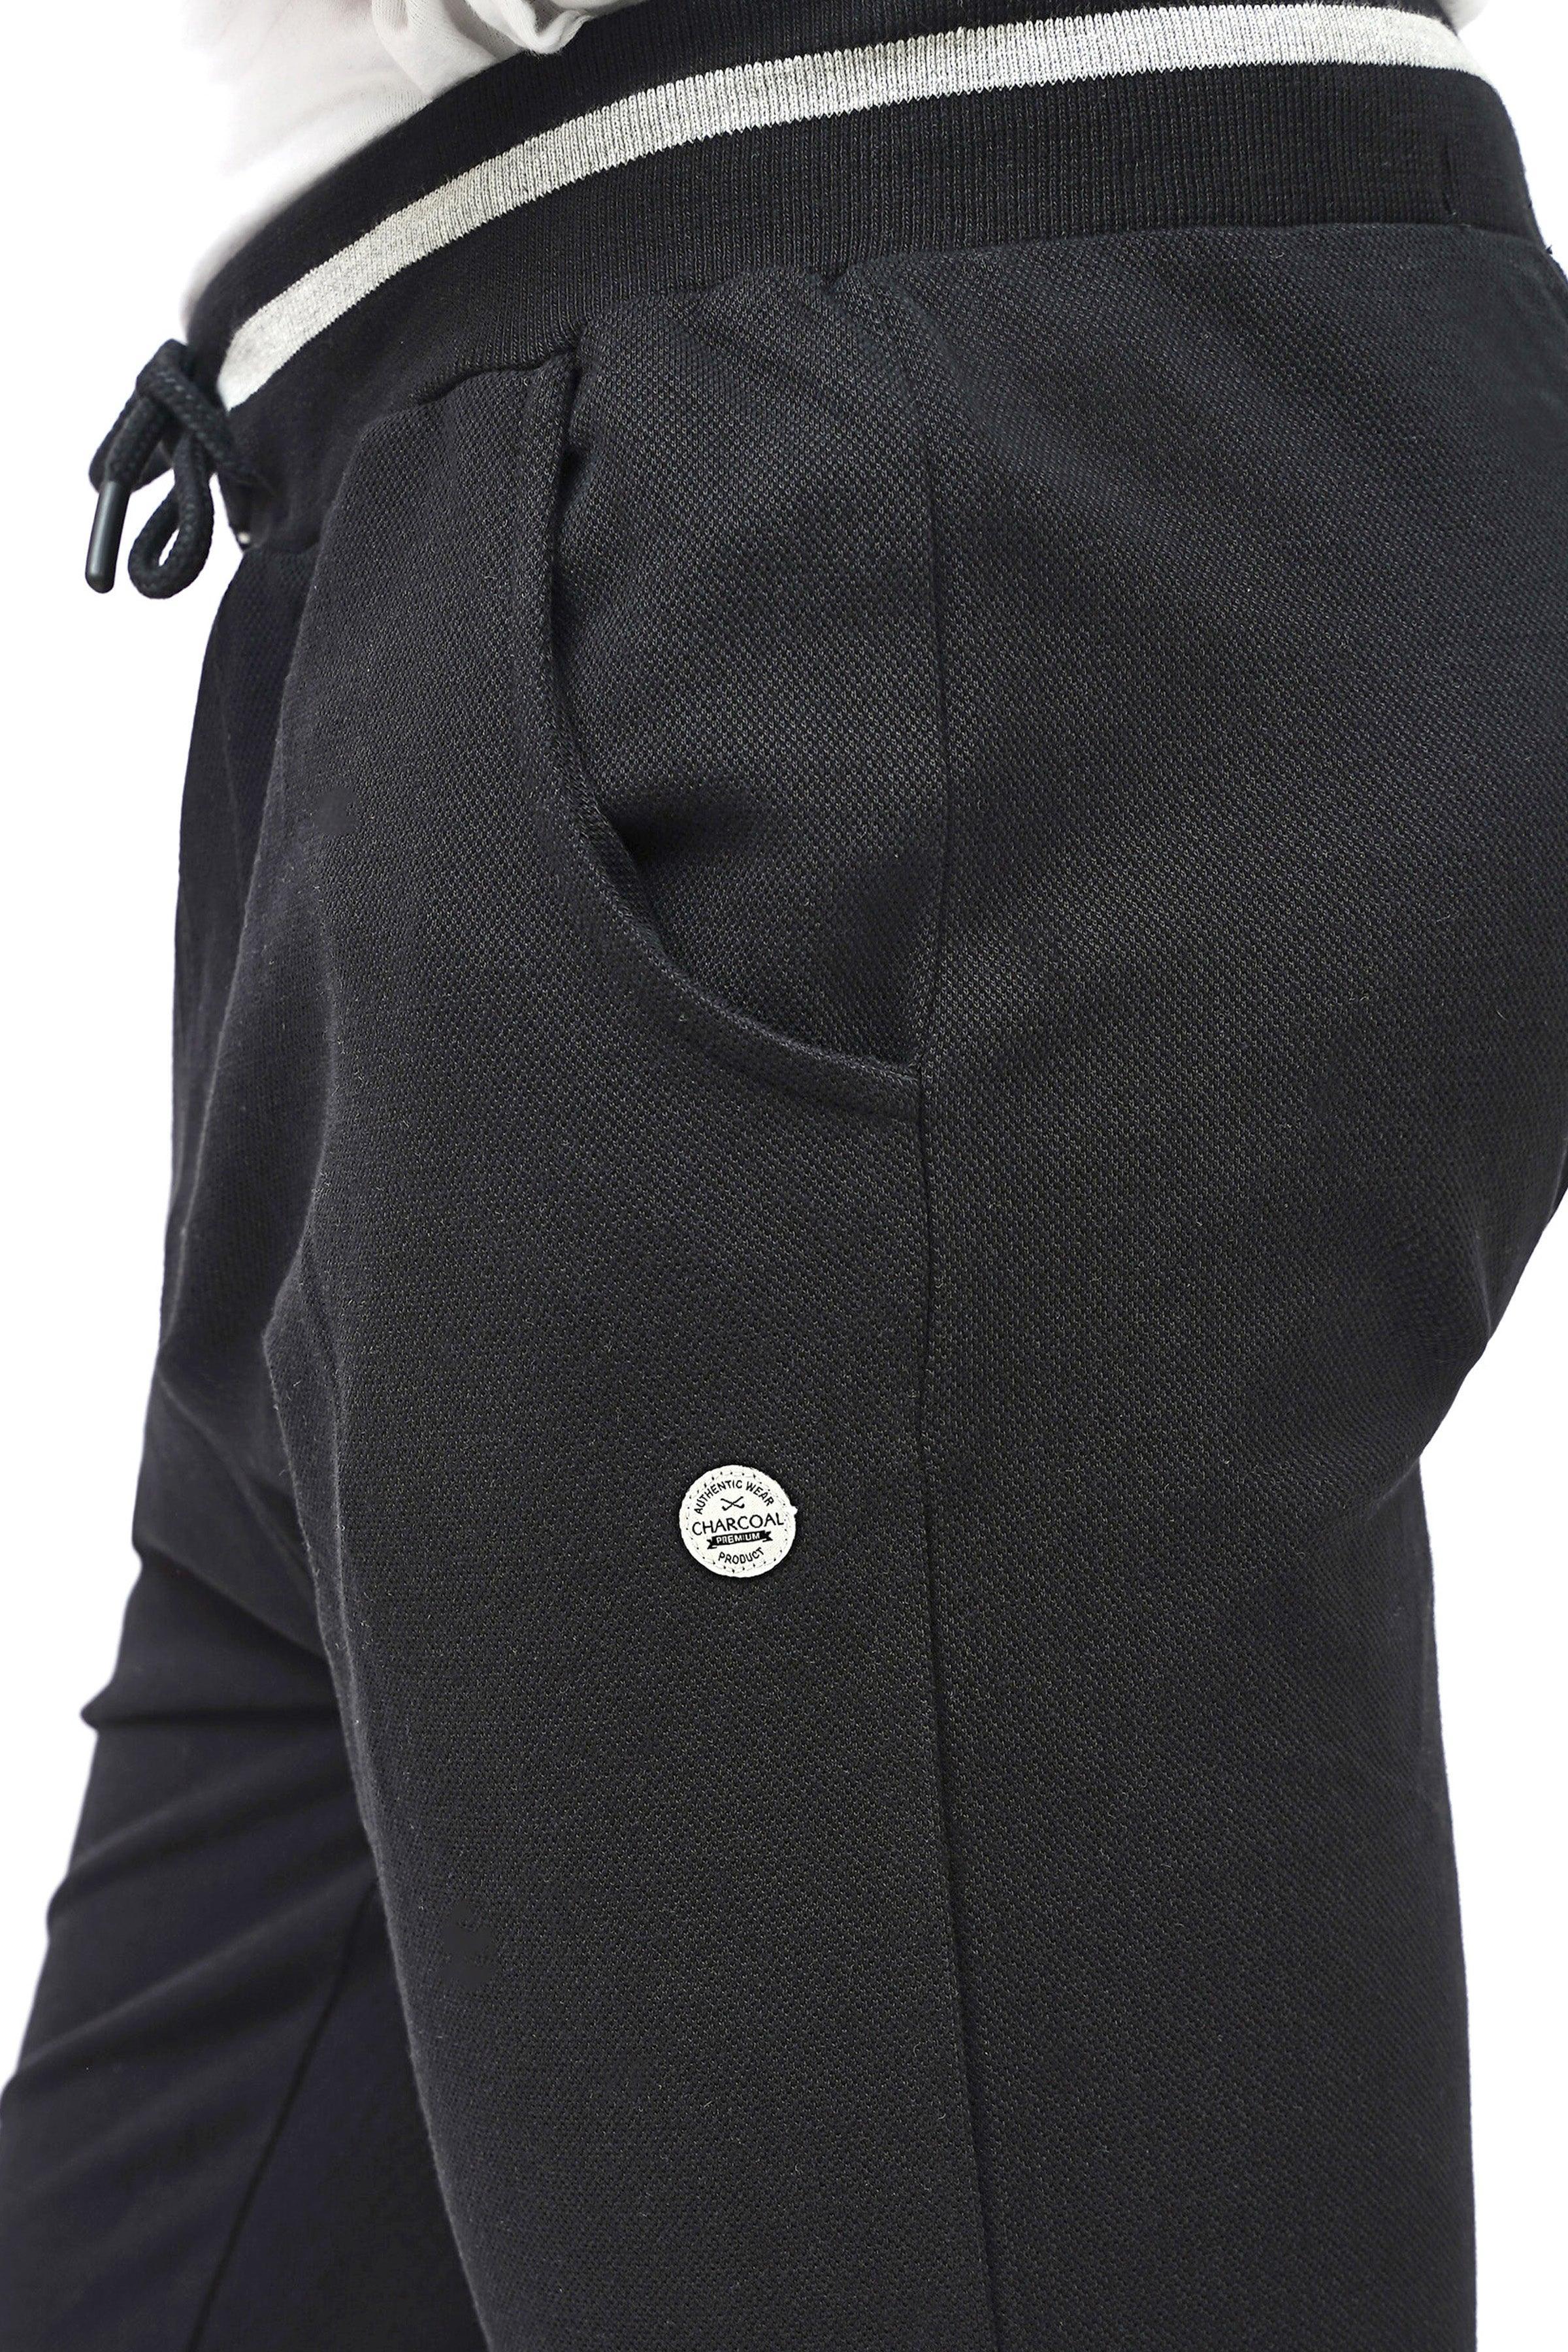 PIQUE REGULAR FIT BLACK SHORTS at Charcoal Clothing